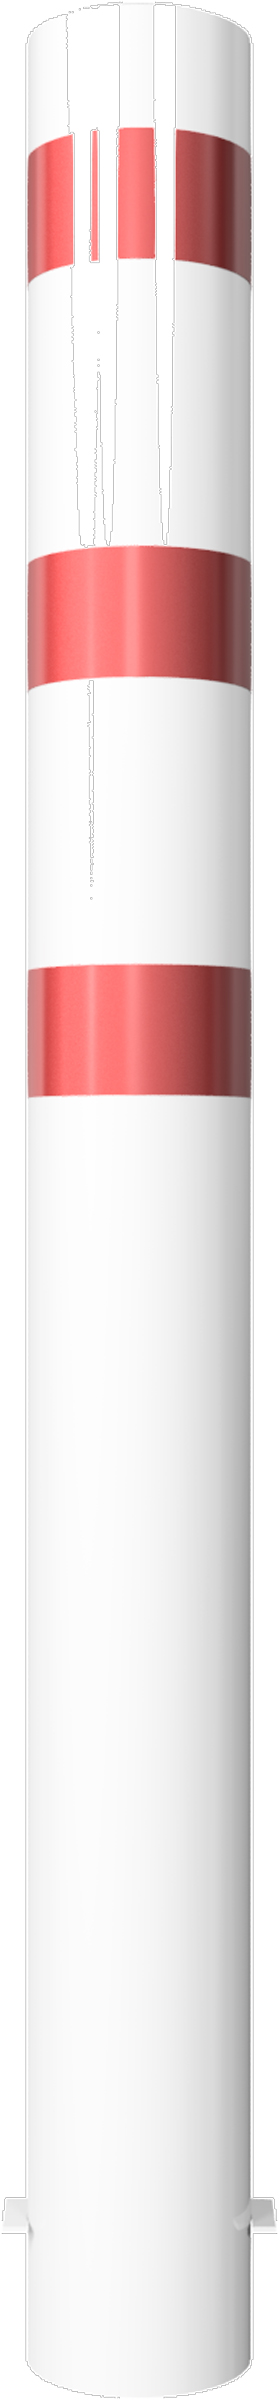 Schake Stahlrohrpoller OE Ø 193 mm weiß | rot - 2,00 m